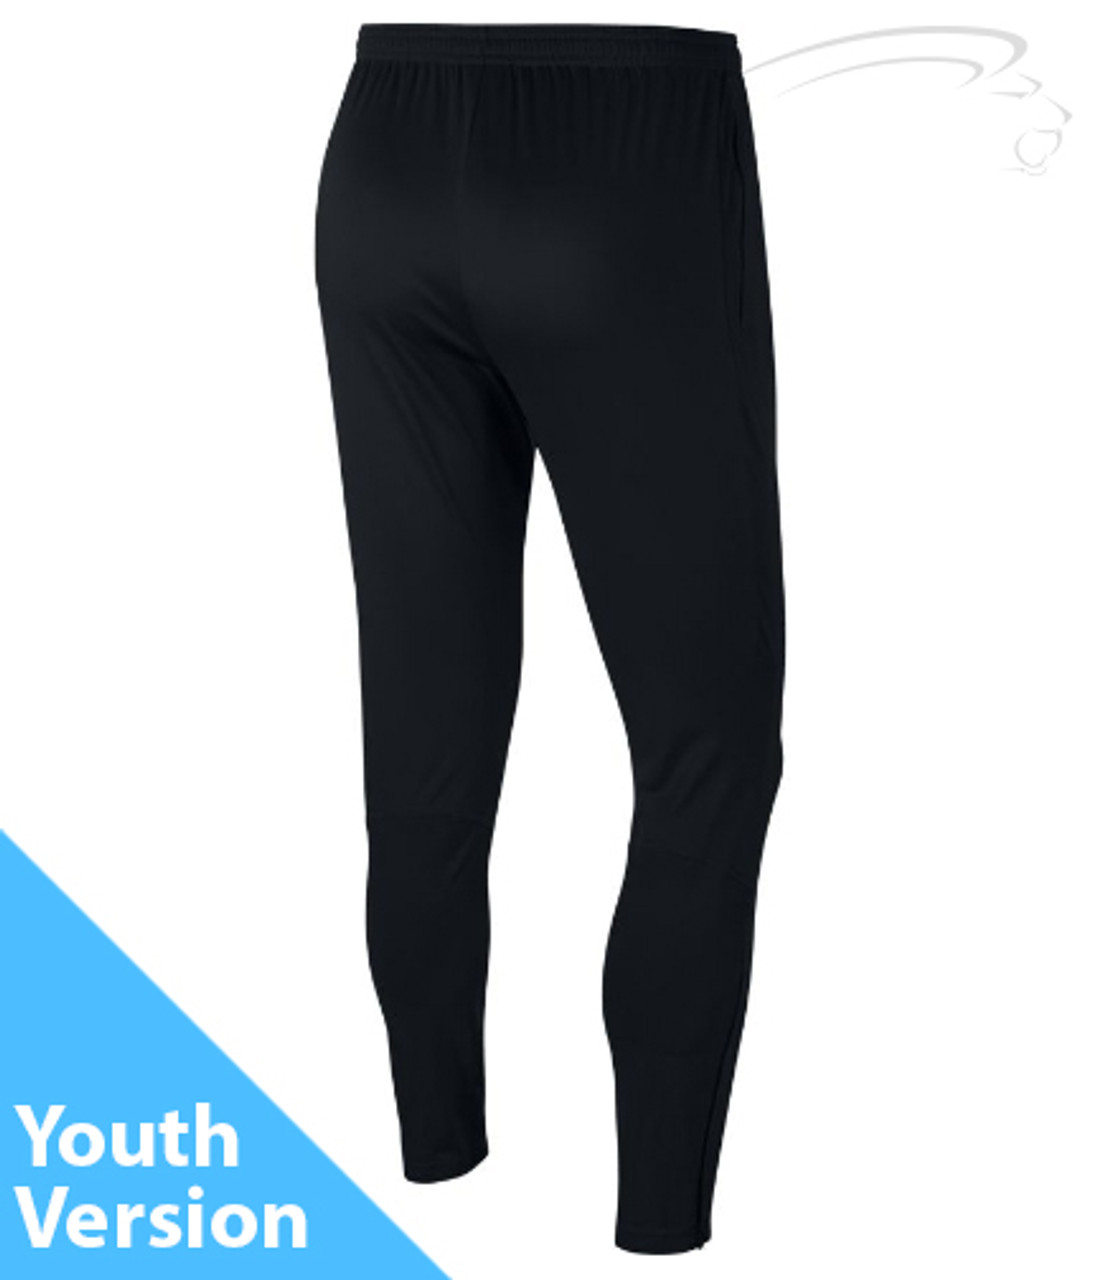 níquel organizar Verter Nike Dry Academy 18 Pant Youth Version 010/Black - Chicago Soccer